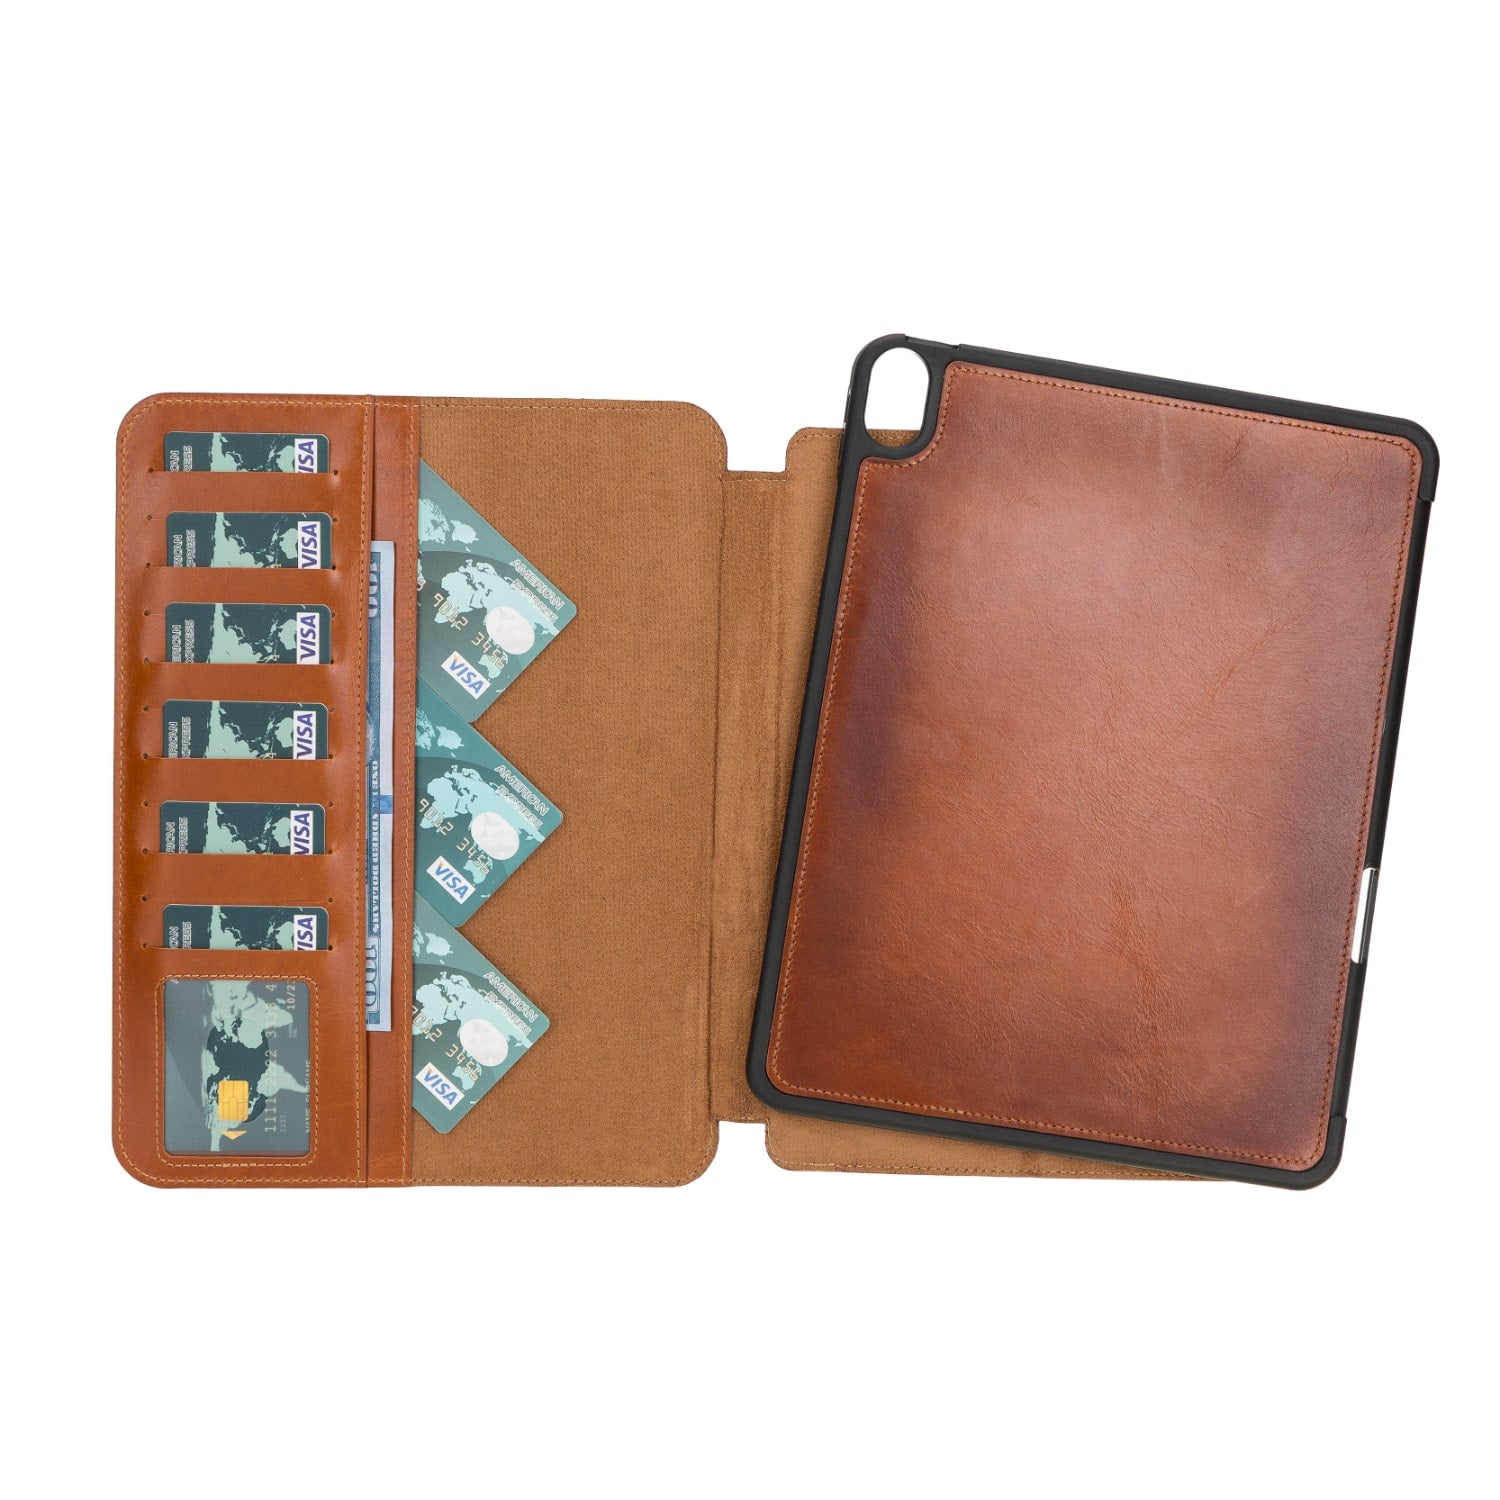 Brown Leather iPad Air 10.9 Inc Smart Folio Case with Apple Pen Holder - Bomonti - 1